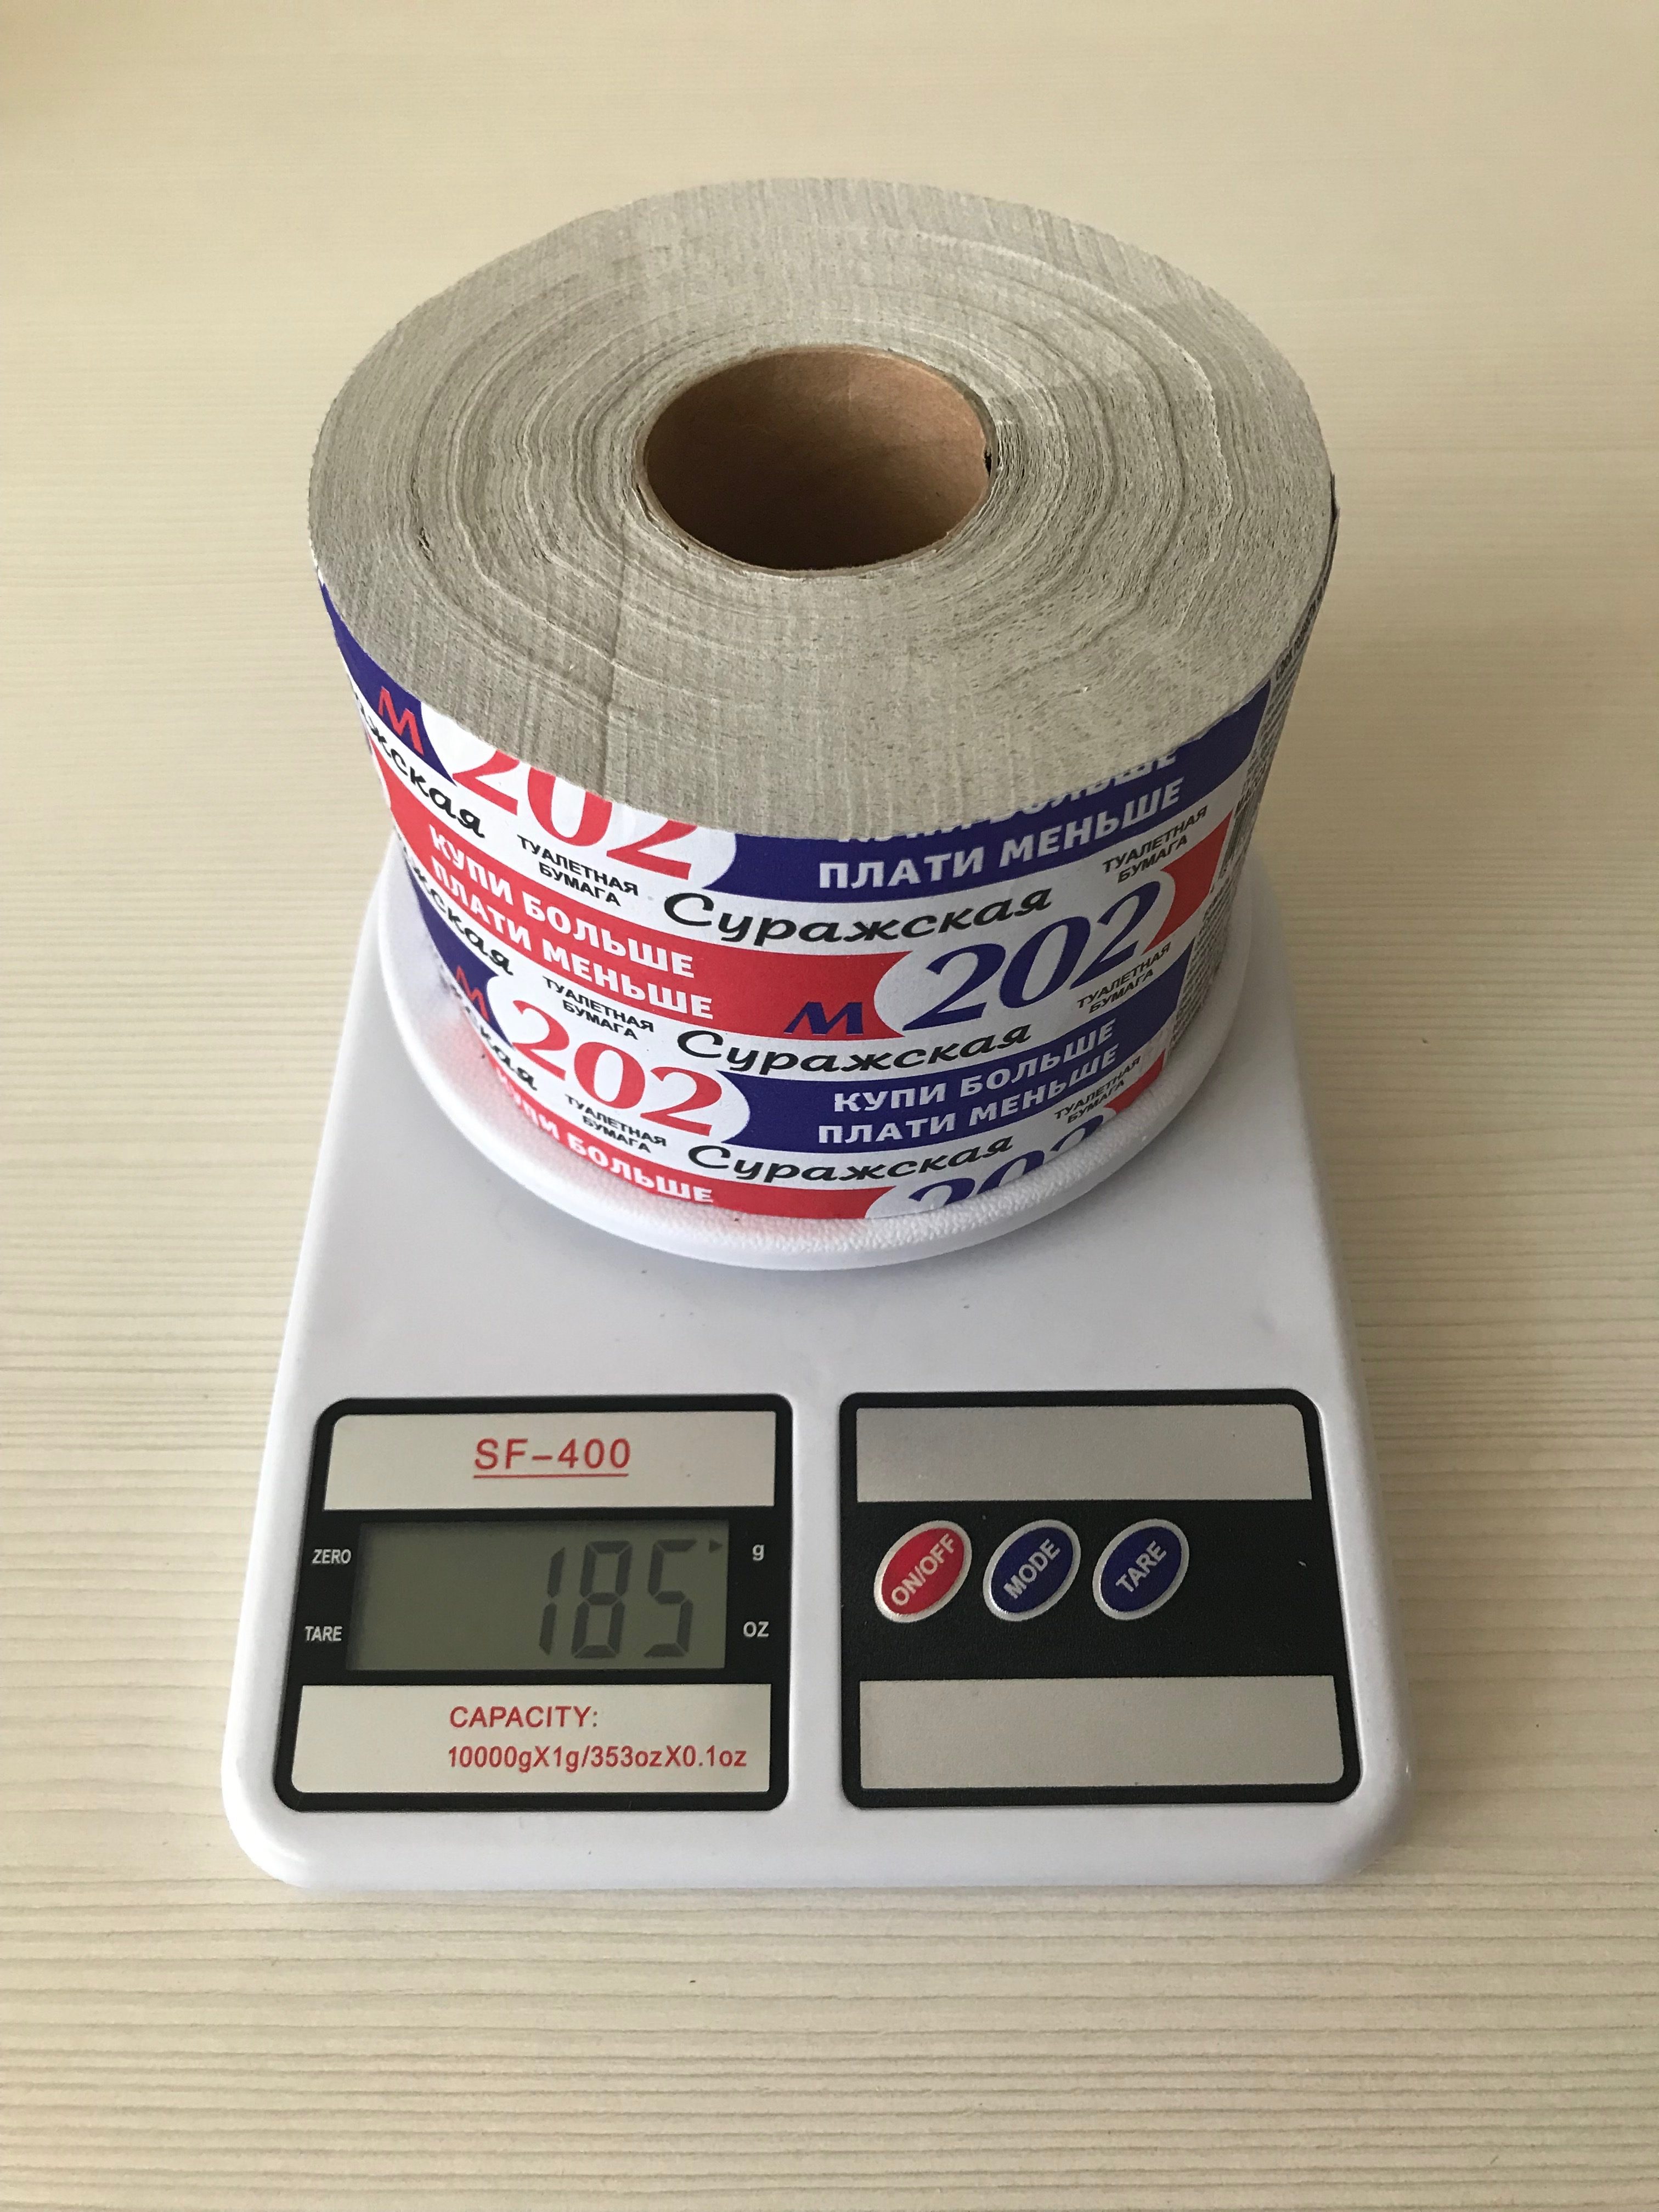 Wie viel wiegt eine Toilettenpapierrolle?